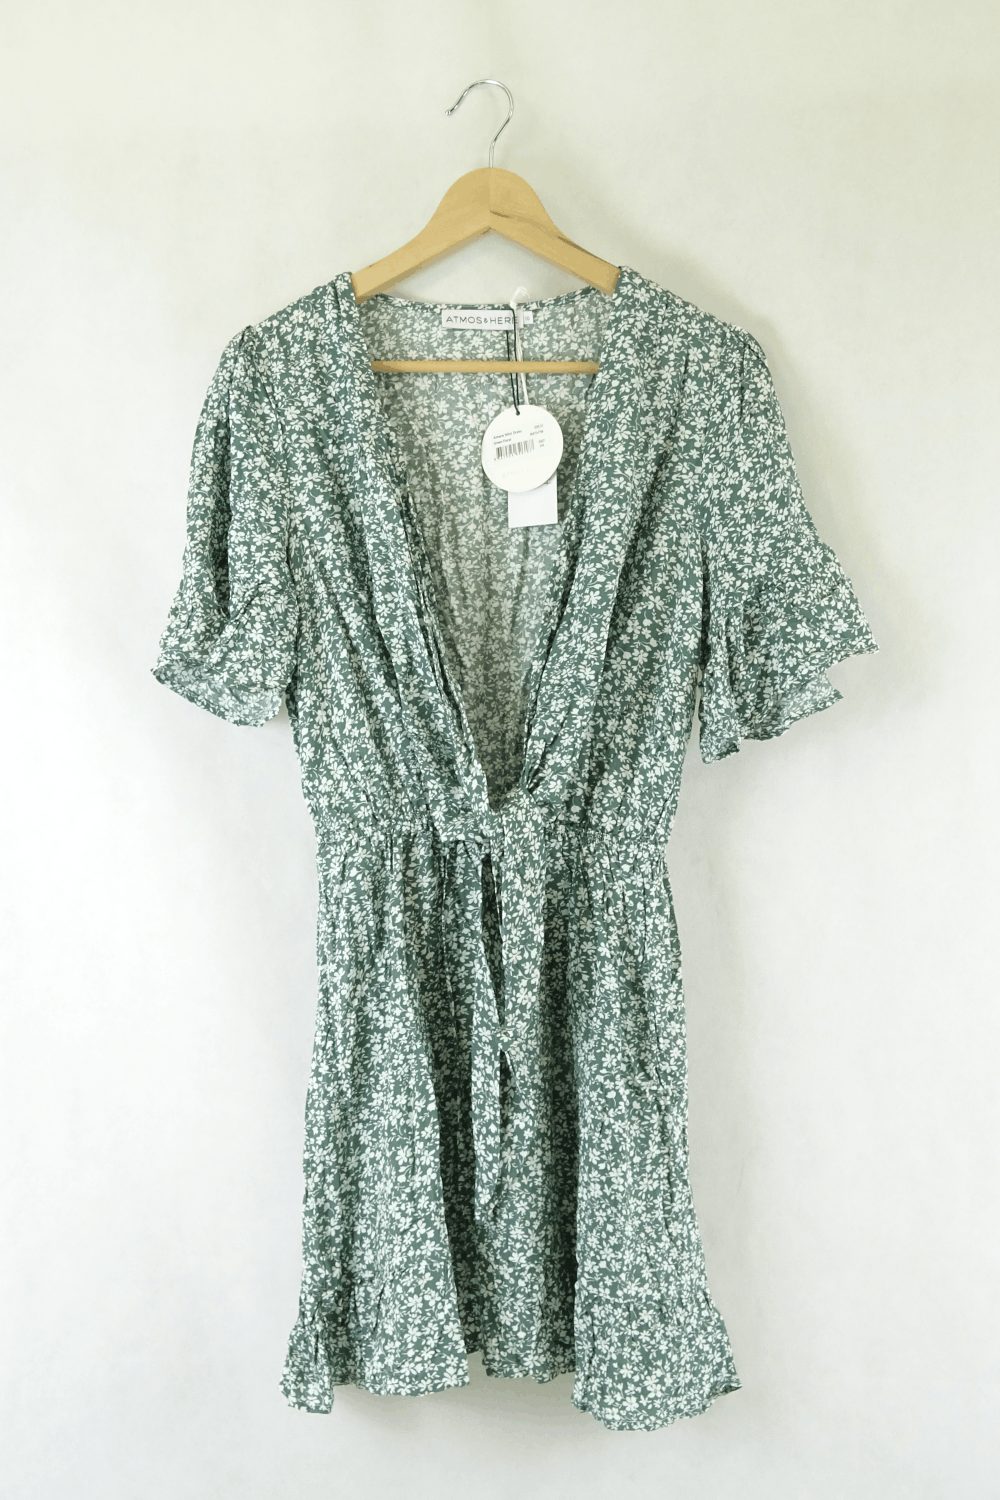 Atmos&Here Green Floral Print Short Sleeve Dress 10